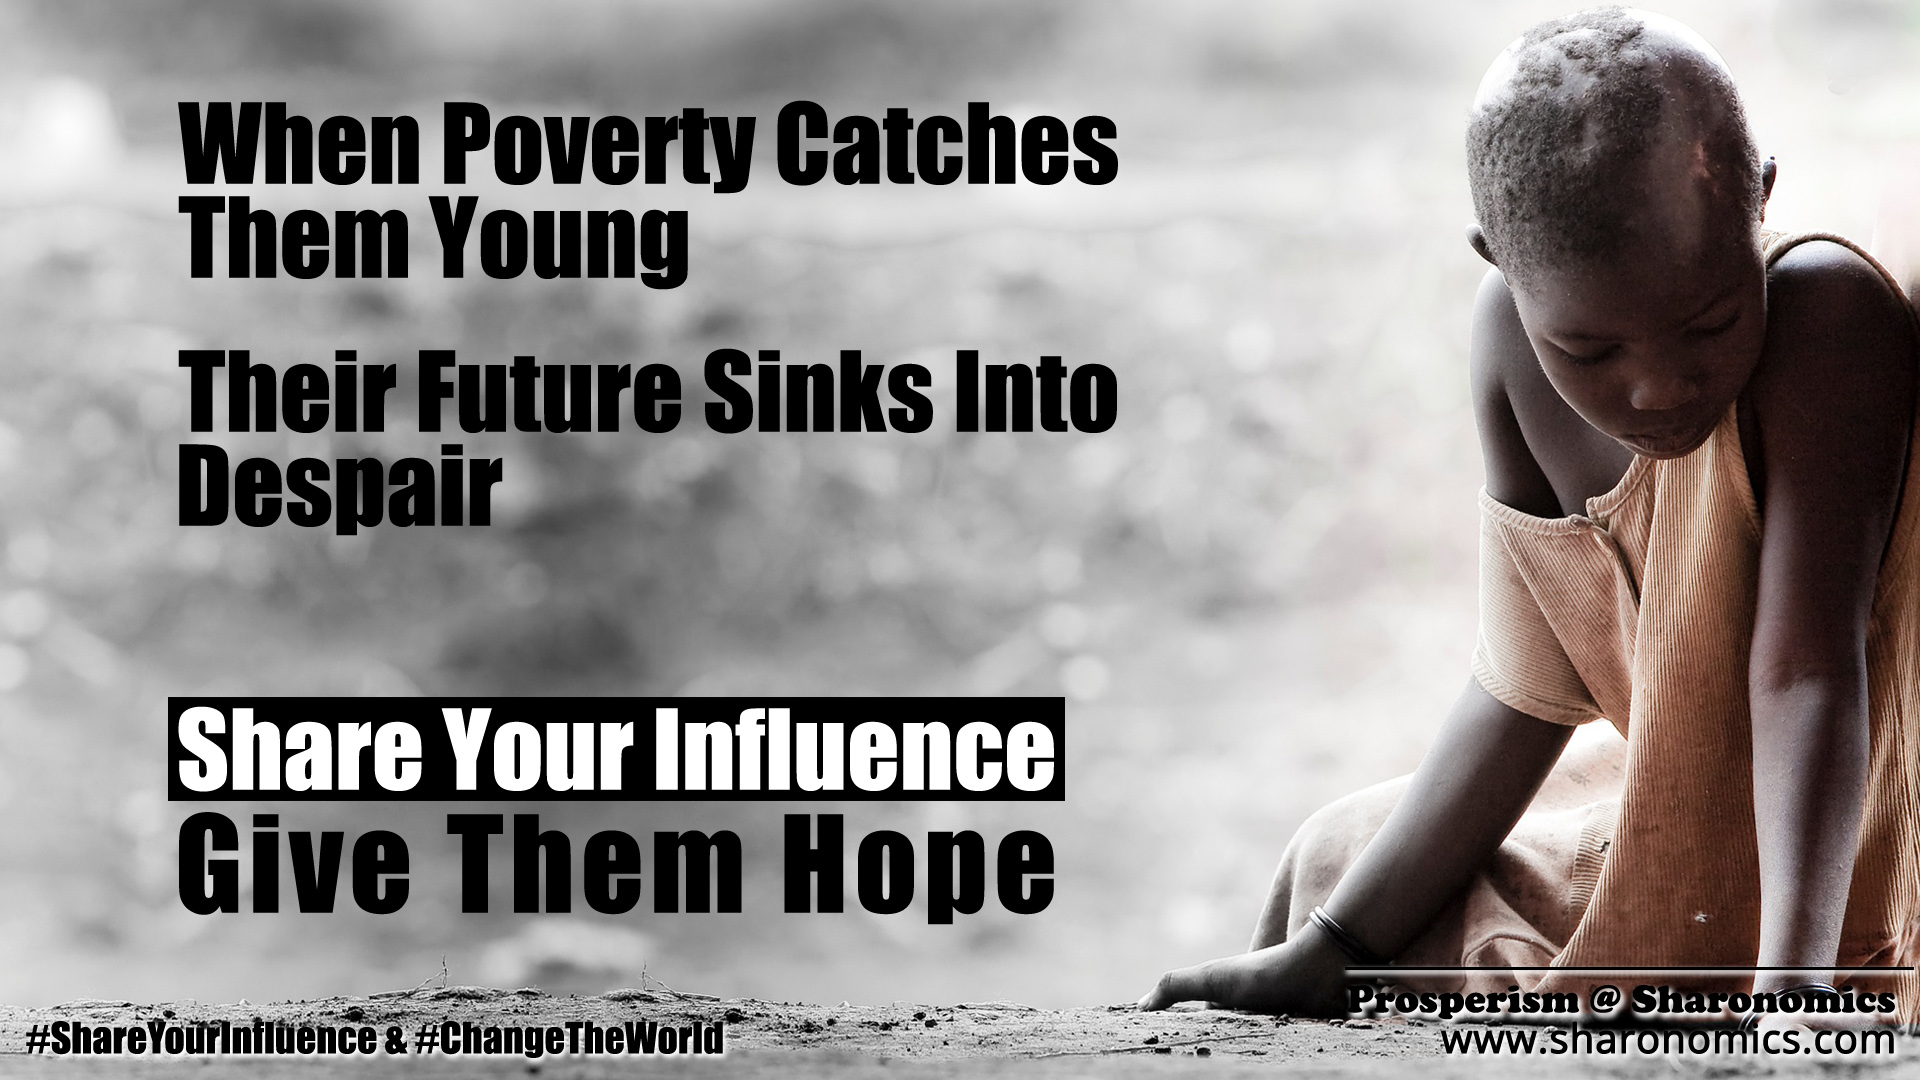 sharonomics, algoshare, prosperism, autonio, poverty, charity, #shareyourinfluence, #changetheworld, poverty, future, young, despair, share, influence, hope